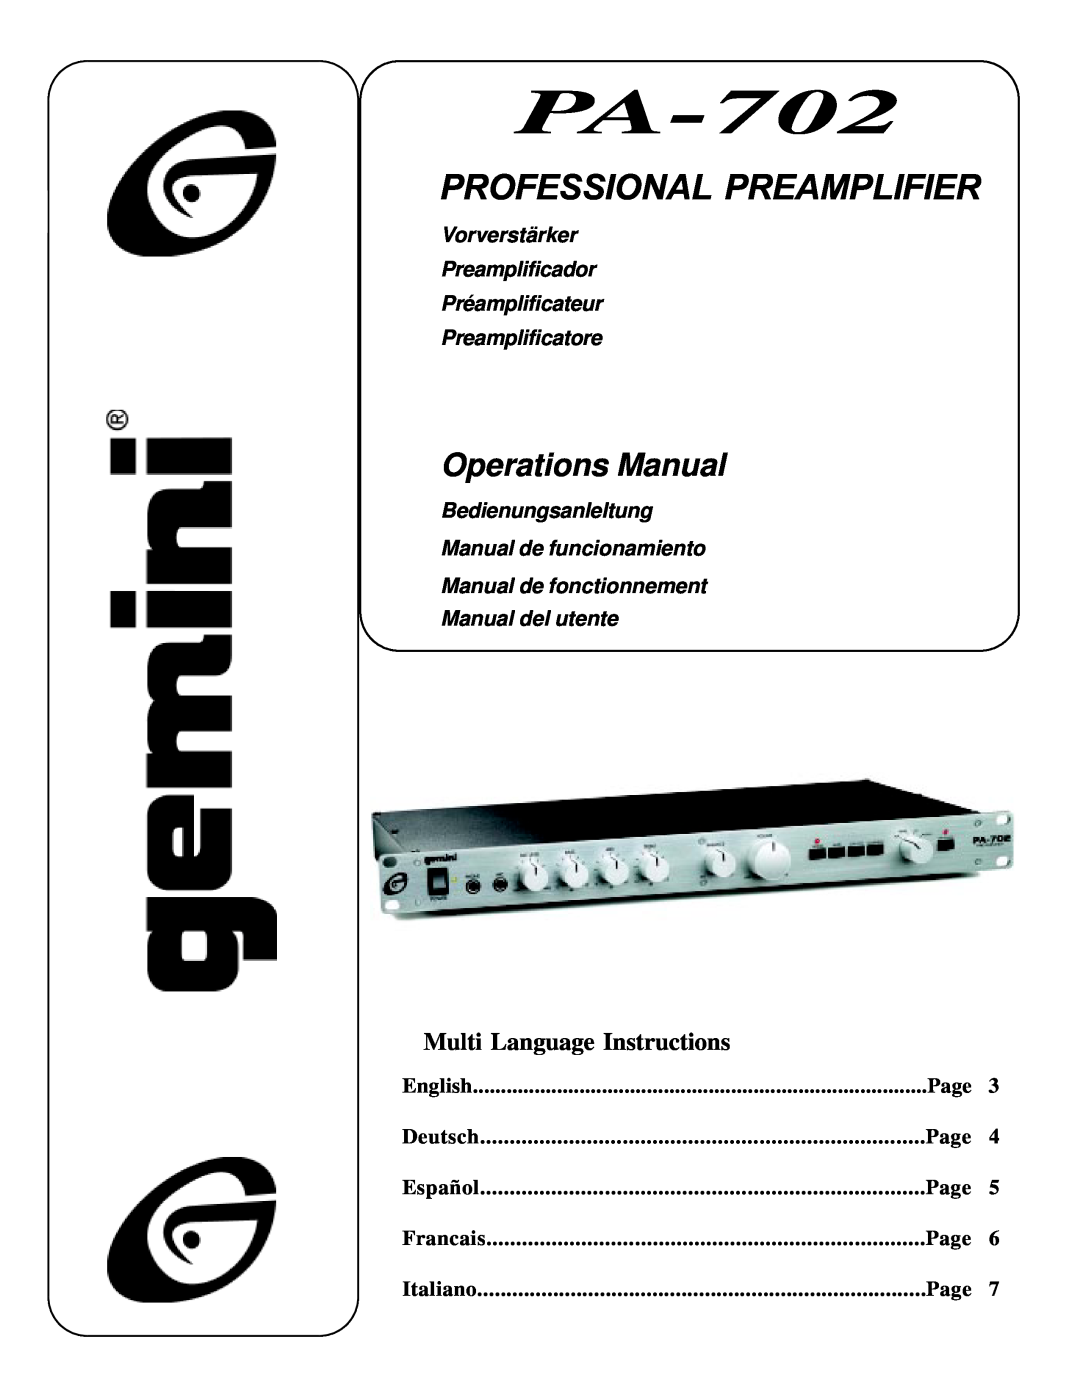 Gemini PA-702 manual Professional Preamplifier, Operations Manual, Multi Language Instructions, Preamplificatore, English 